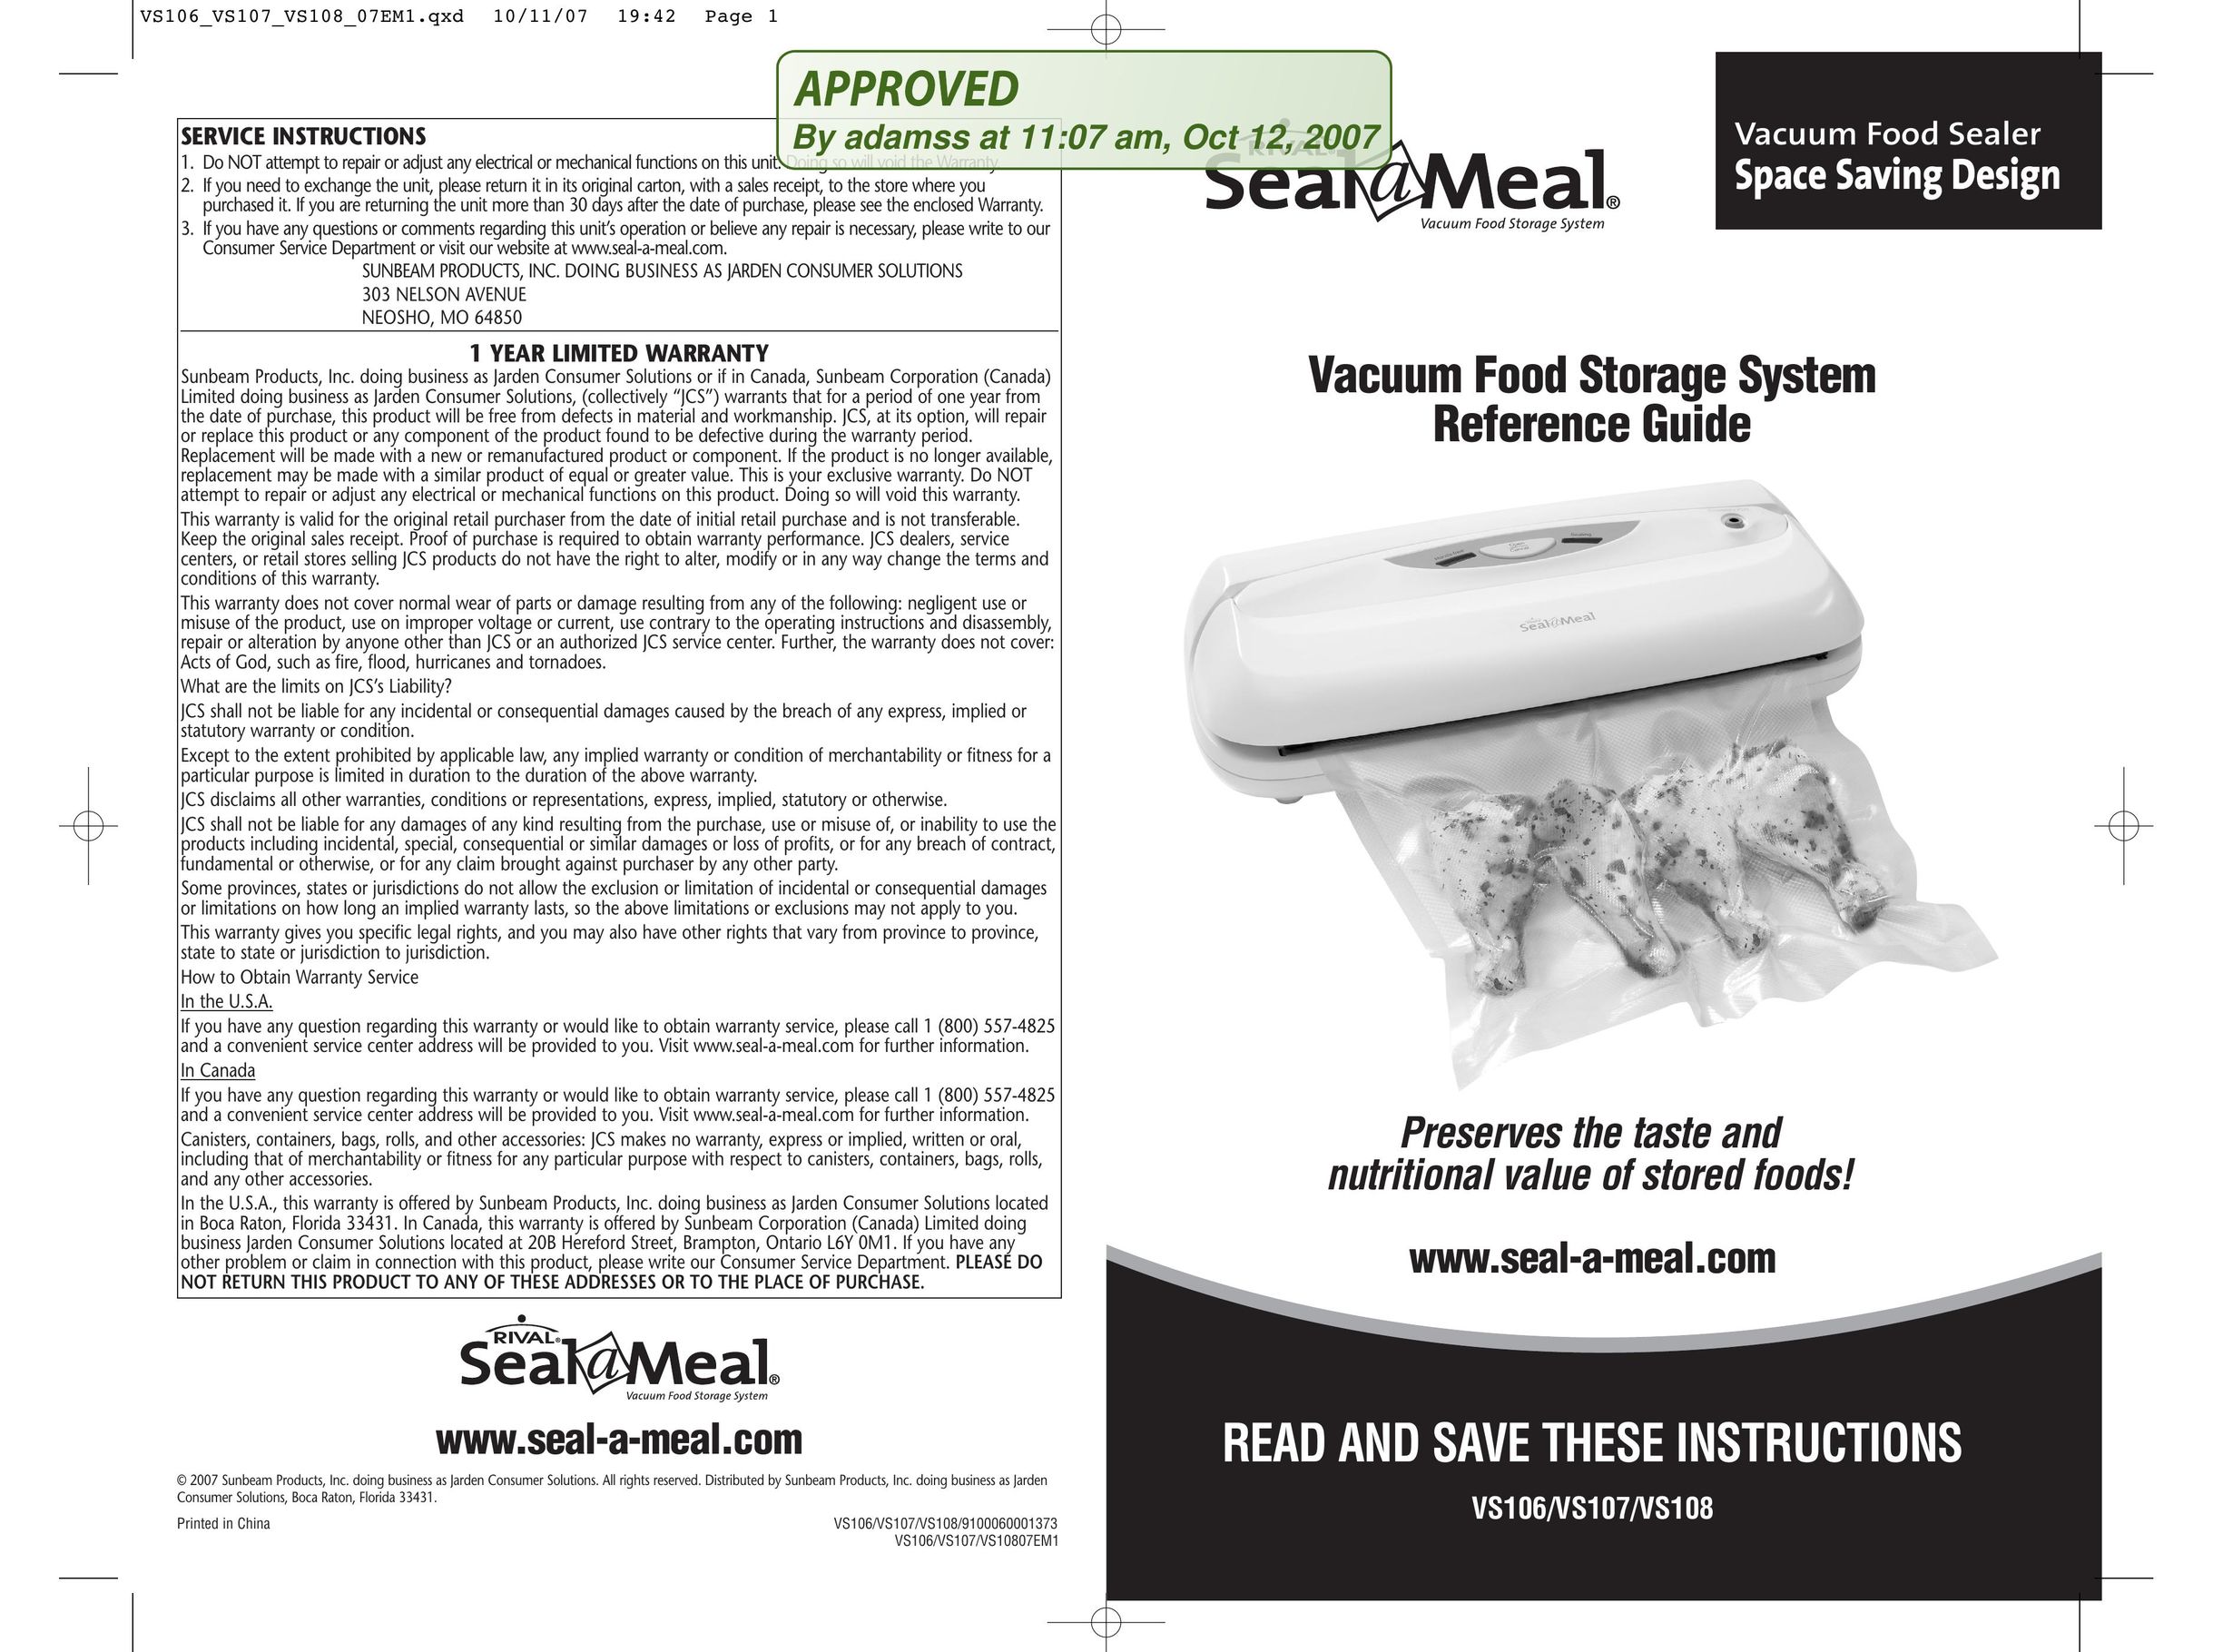 Seal-a-Meal VS106 Food Saver User Manual